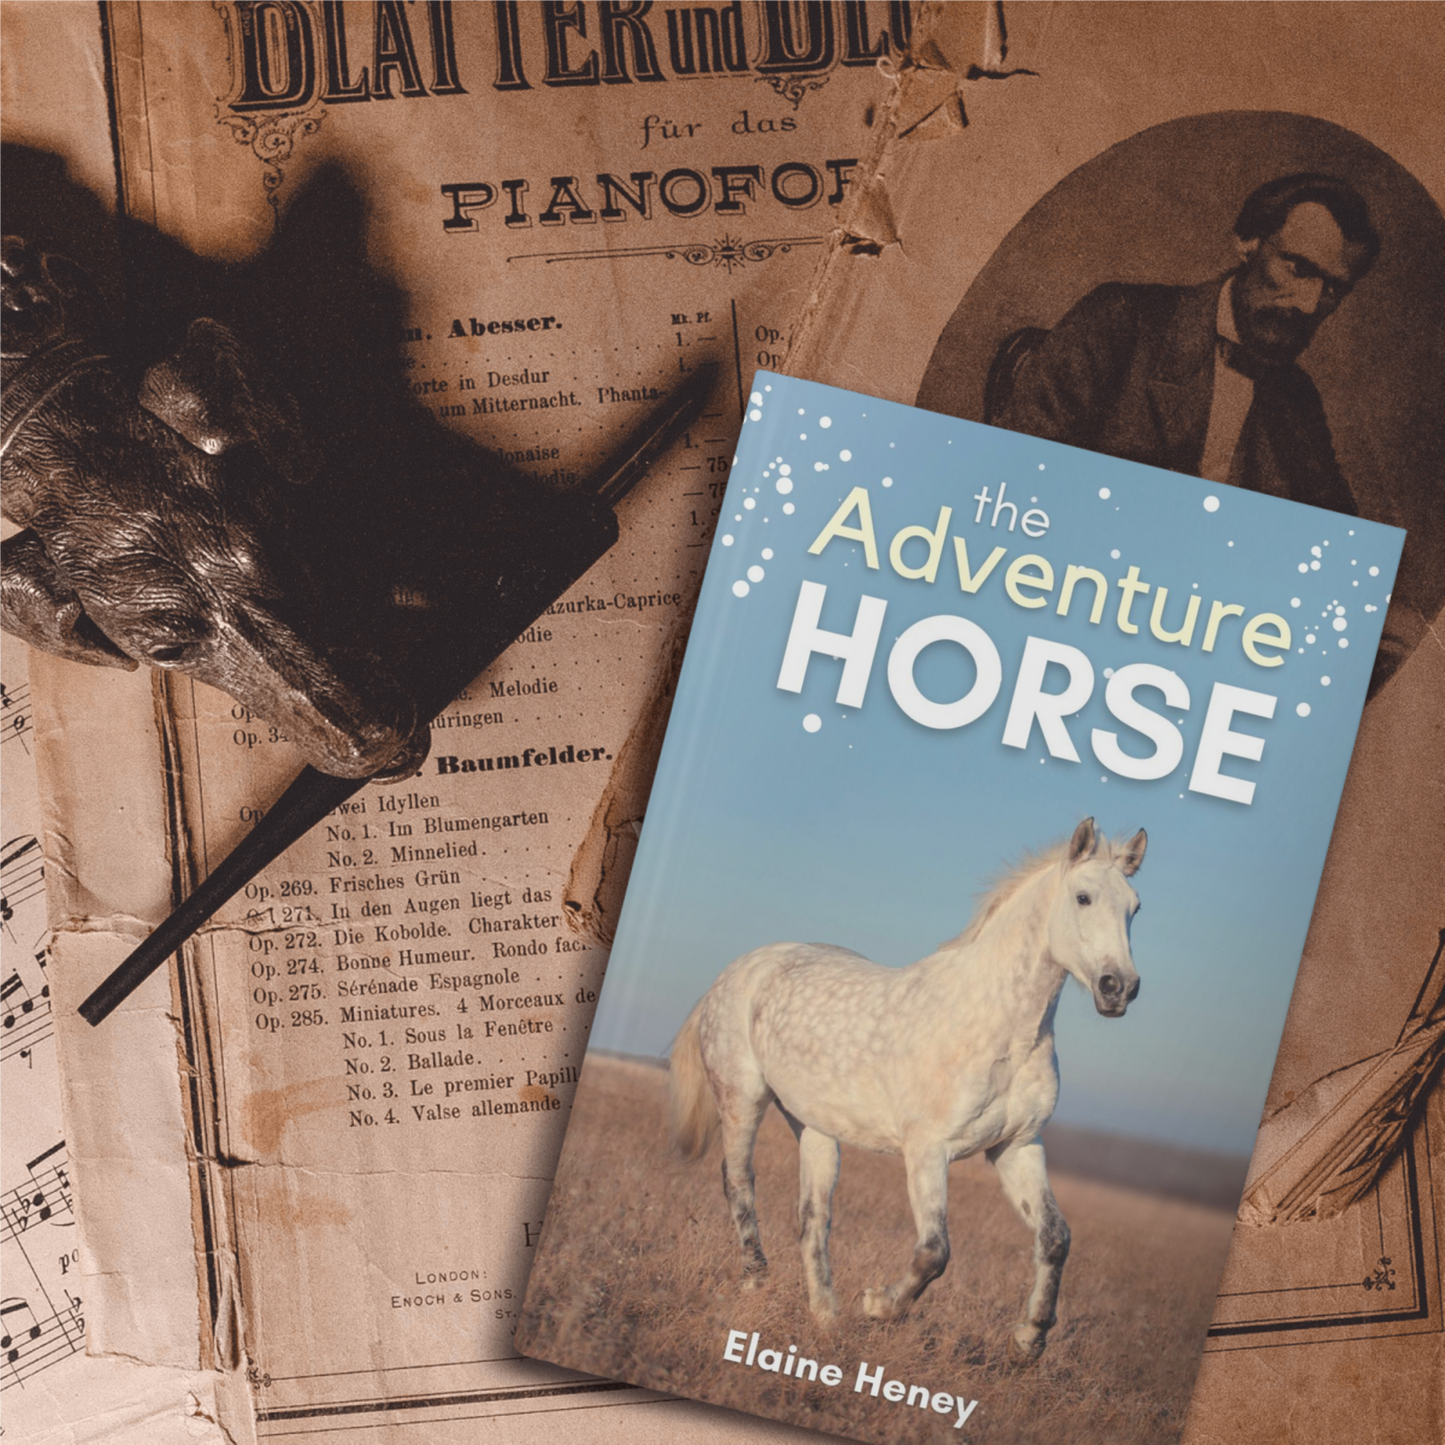 The Adventure Horse - Book 5 in the Connemara Horse Adventure Series for Kids